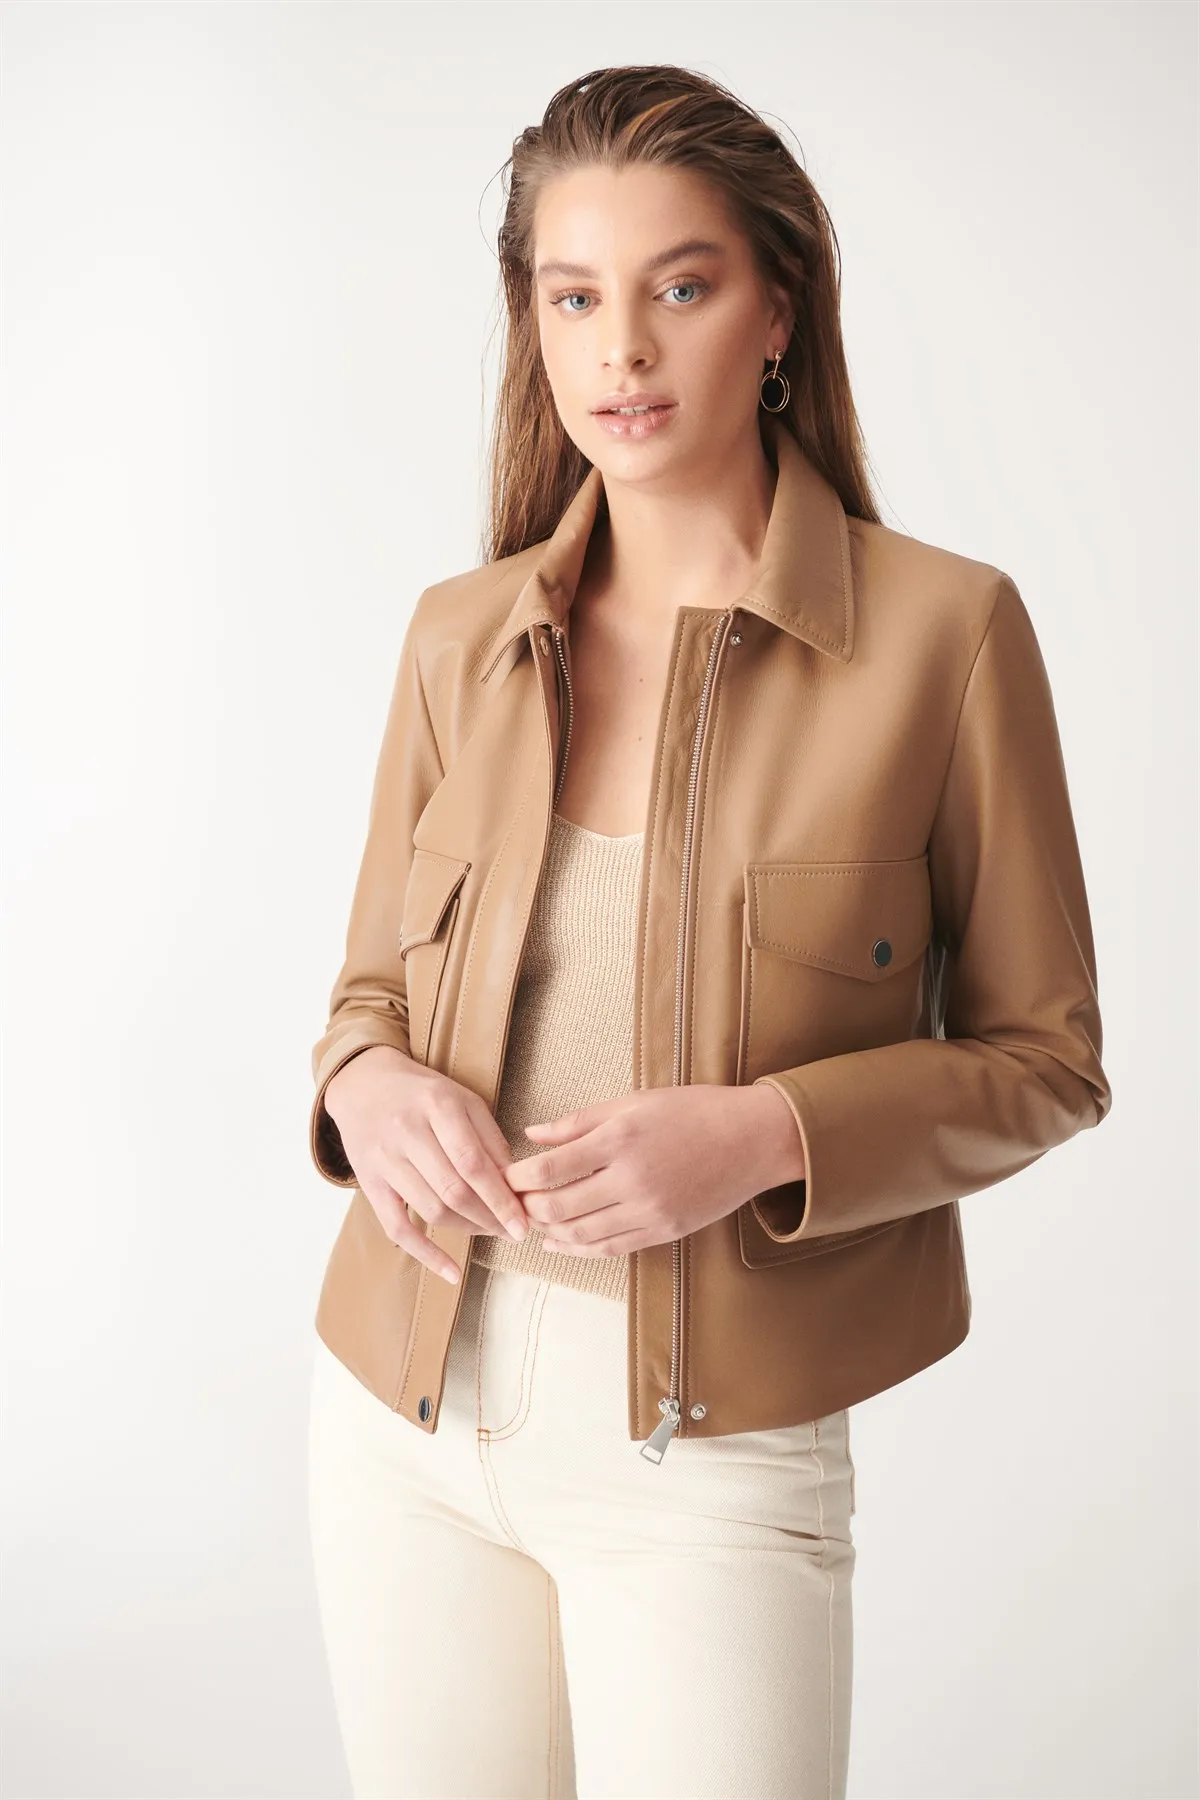 Brown Leather Jacket Women Genuine Leather Coats Genuine Sheepskin Classic Stylish Design Outfits Spring Autumn 2022 Fashion